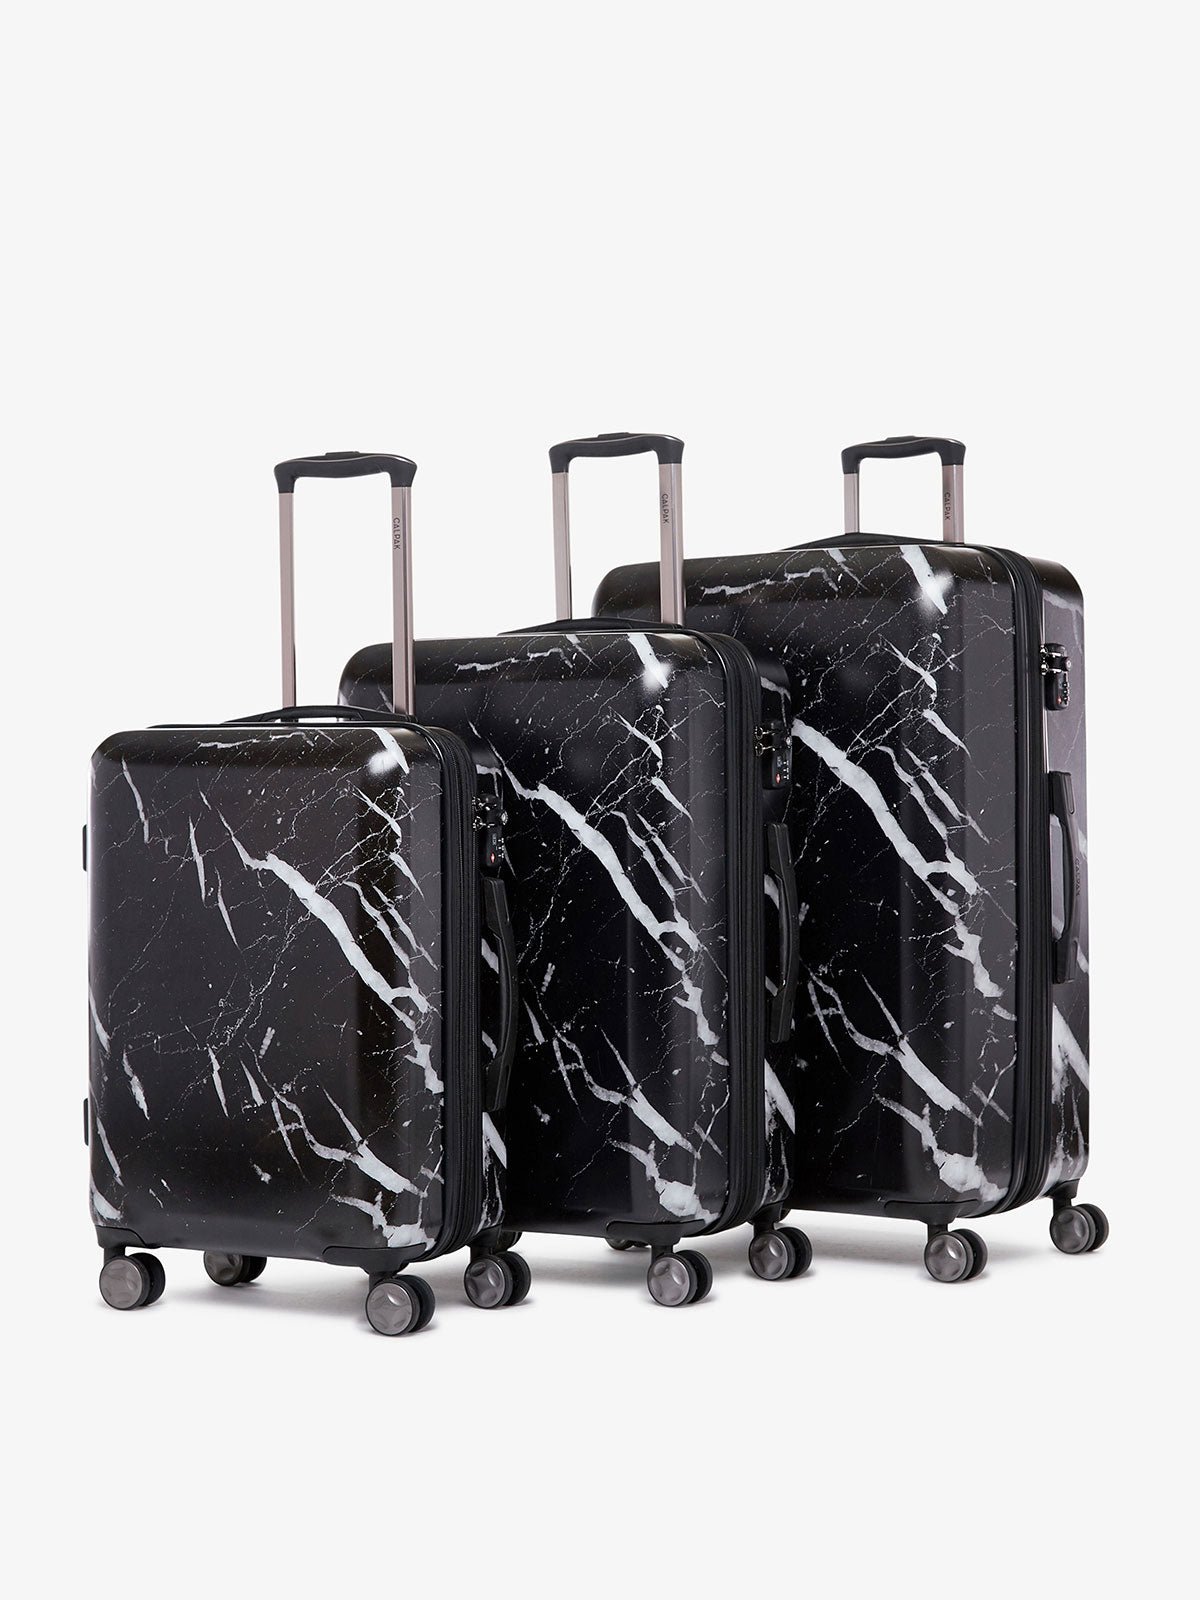 CALPAK Astyll 3-piece luggage set in midnight marble